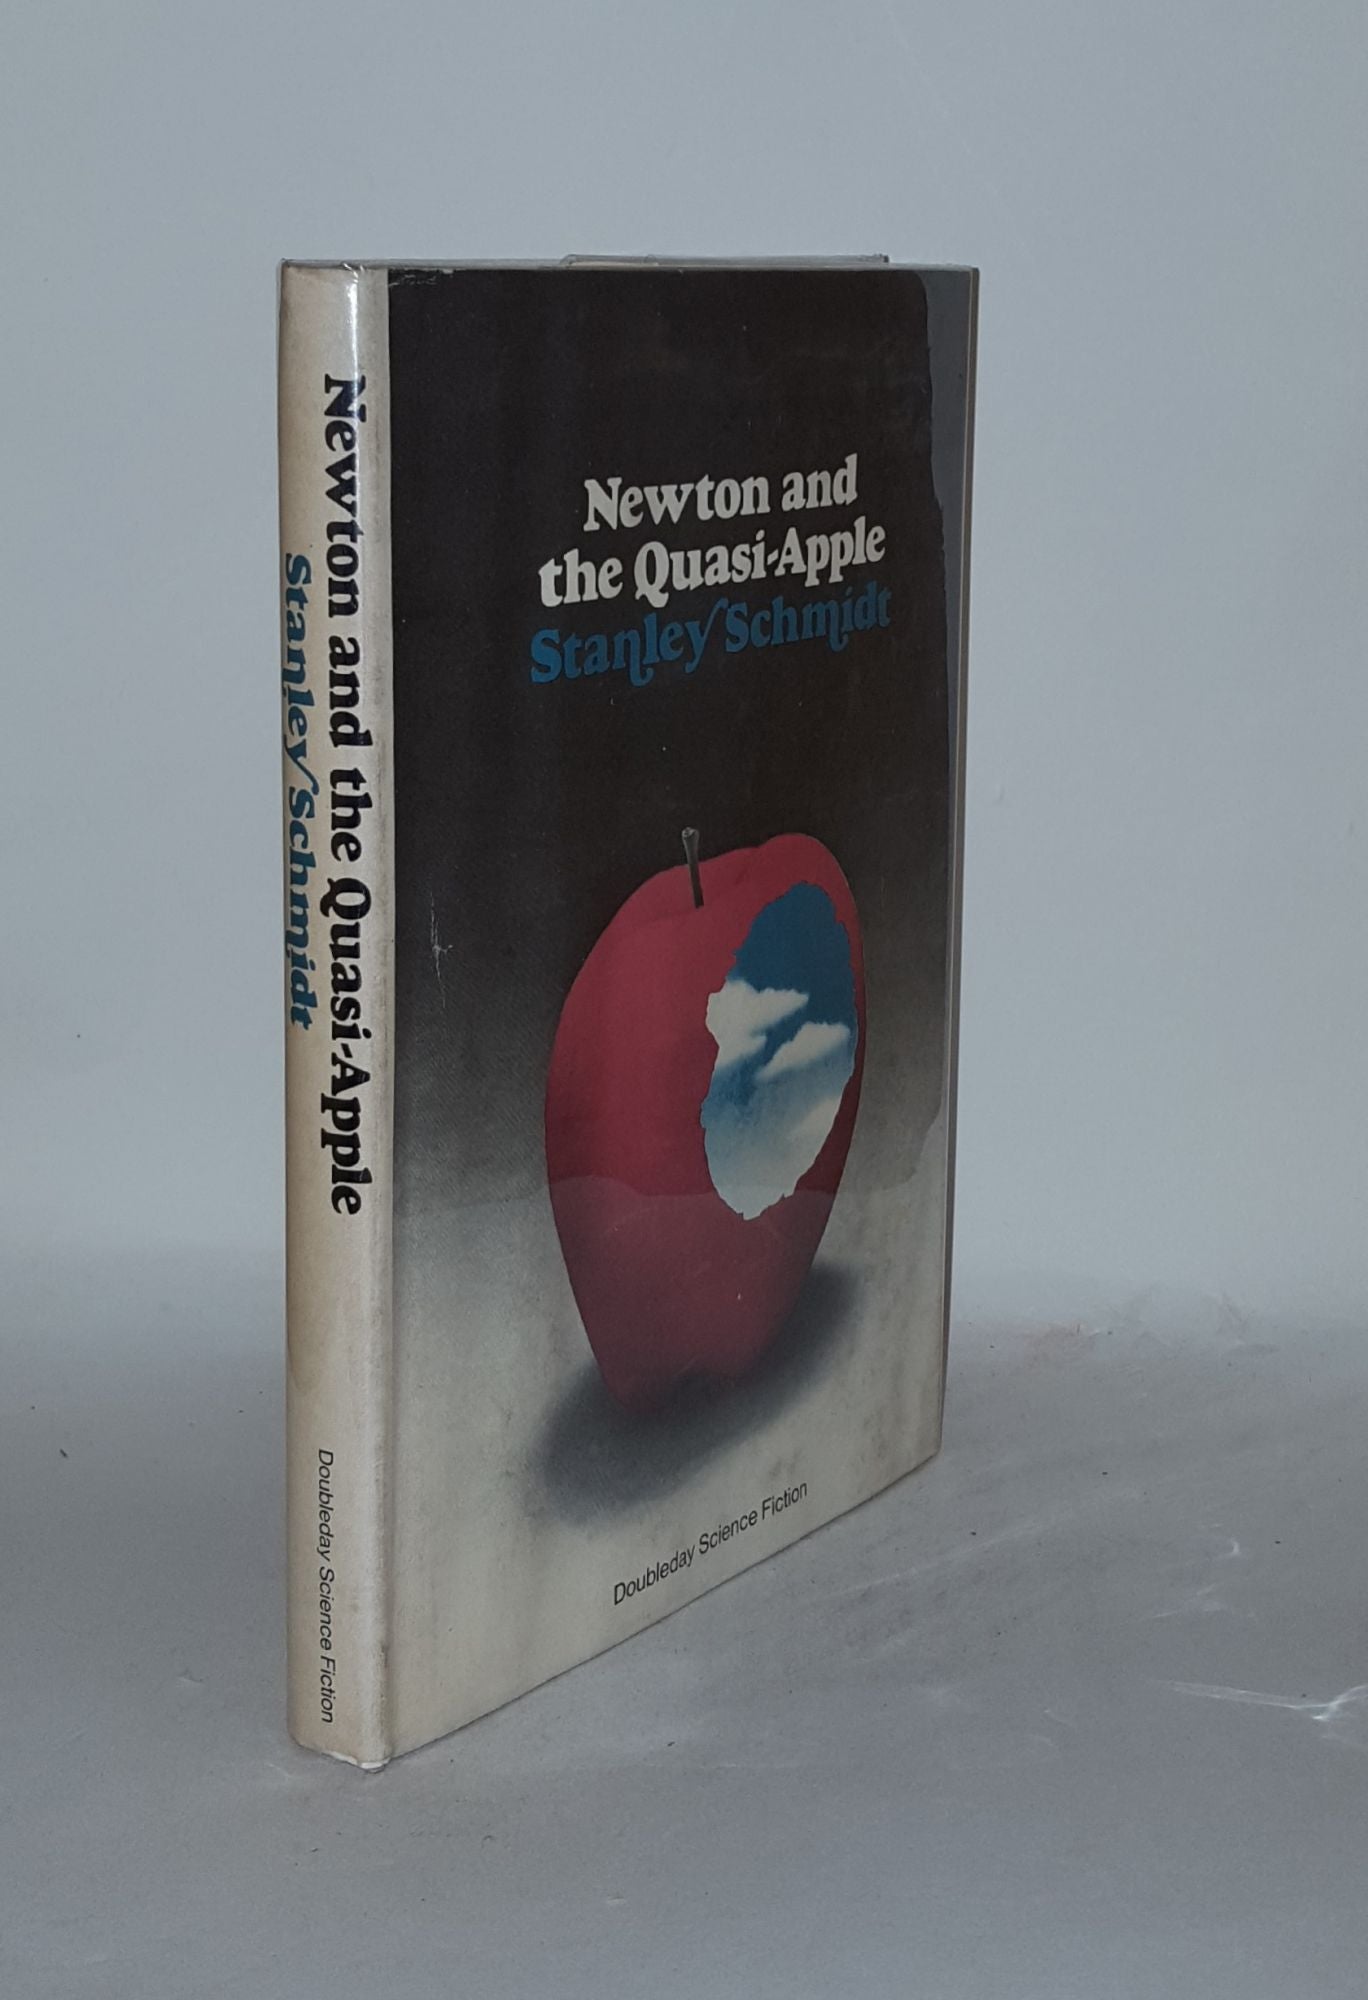 SCHMIDT Stanley - Newton and the Quasi-Apple